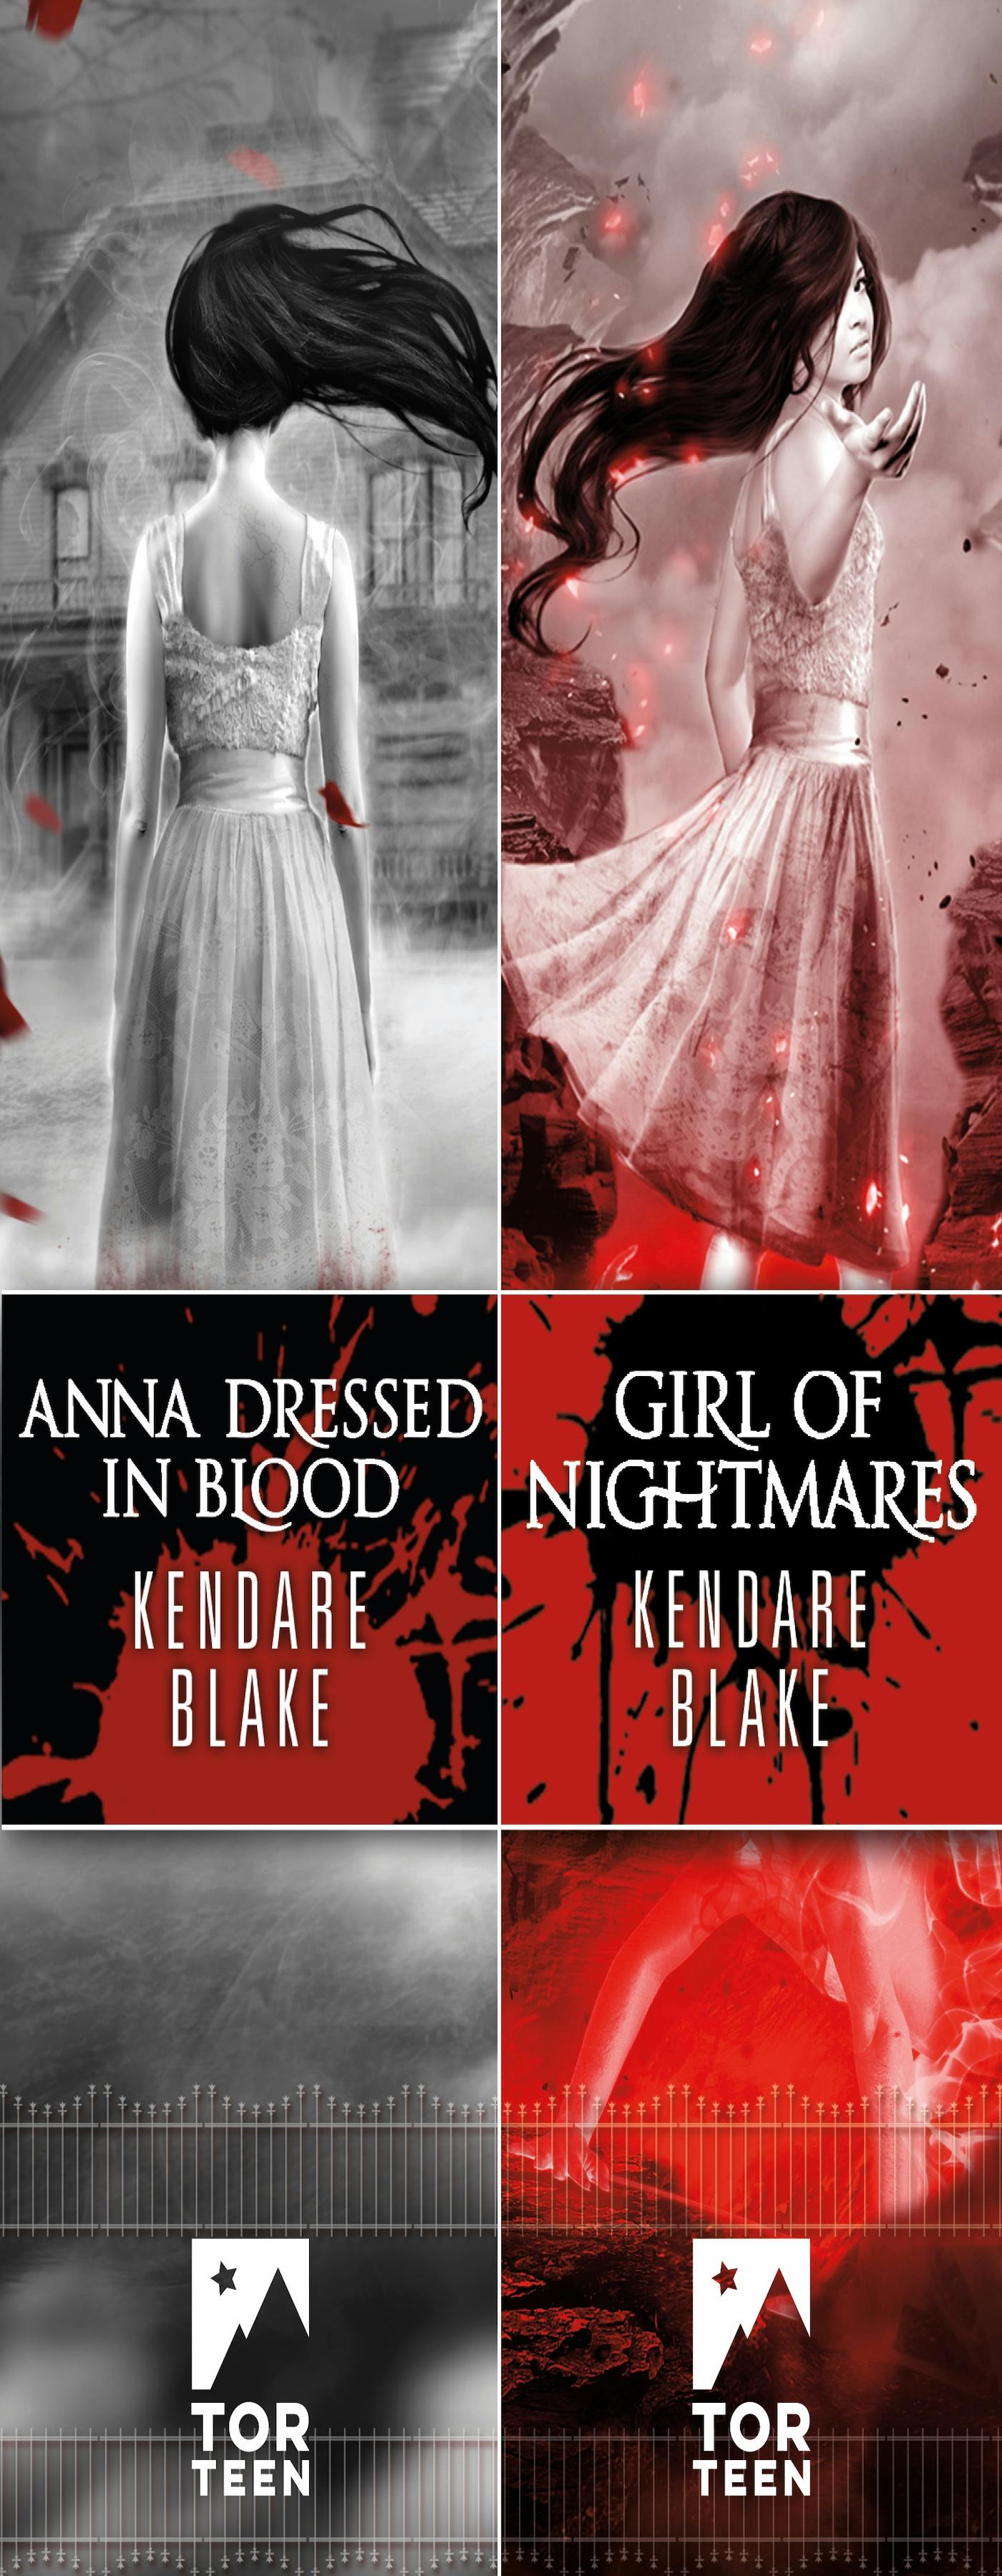 anna dressed in blood genre